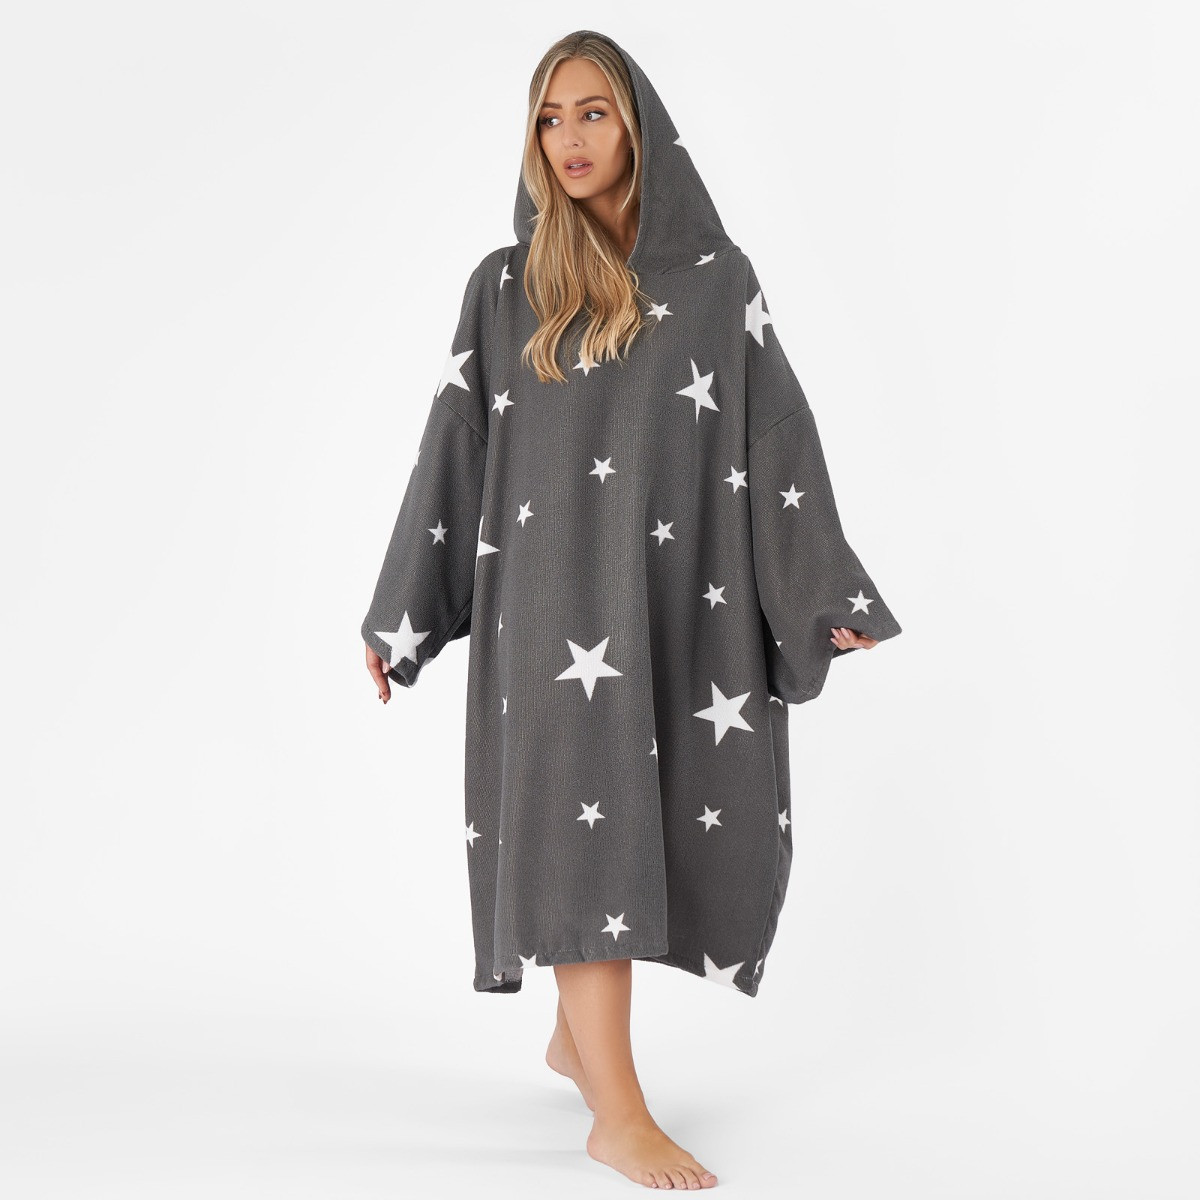 OHS Adult Towel Poncho Star Print - Charcoal Grey>